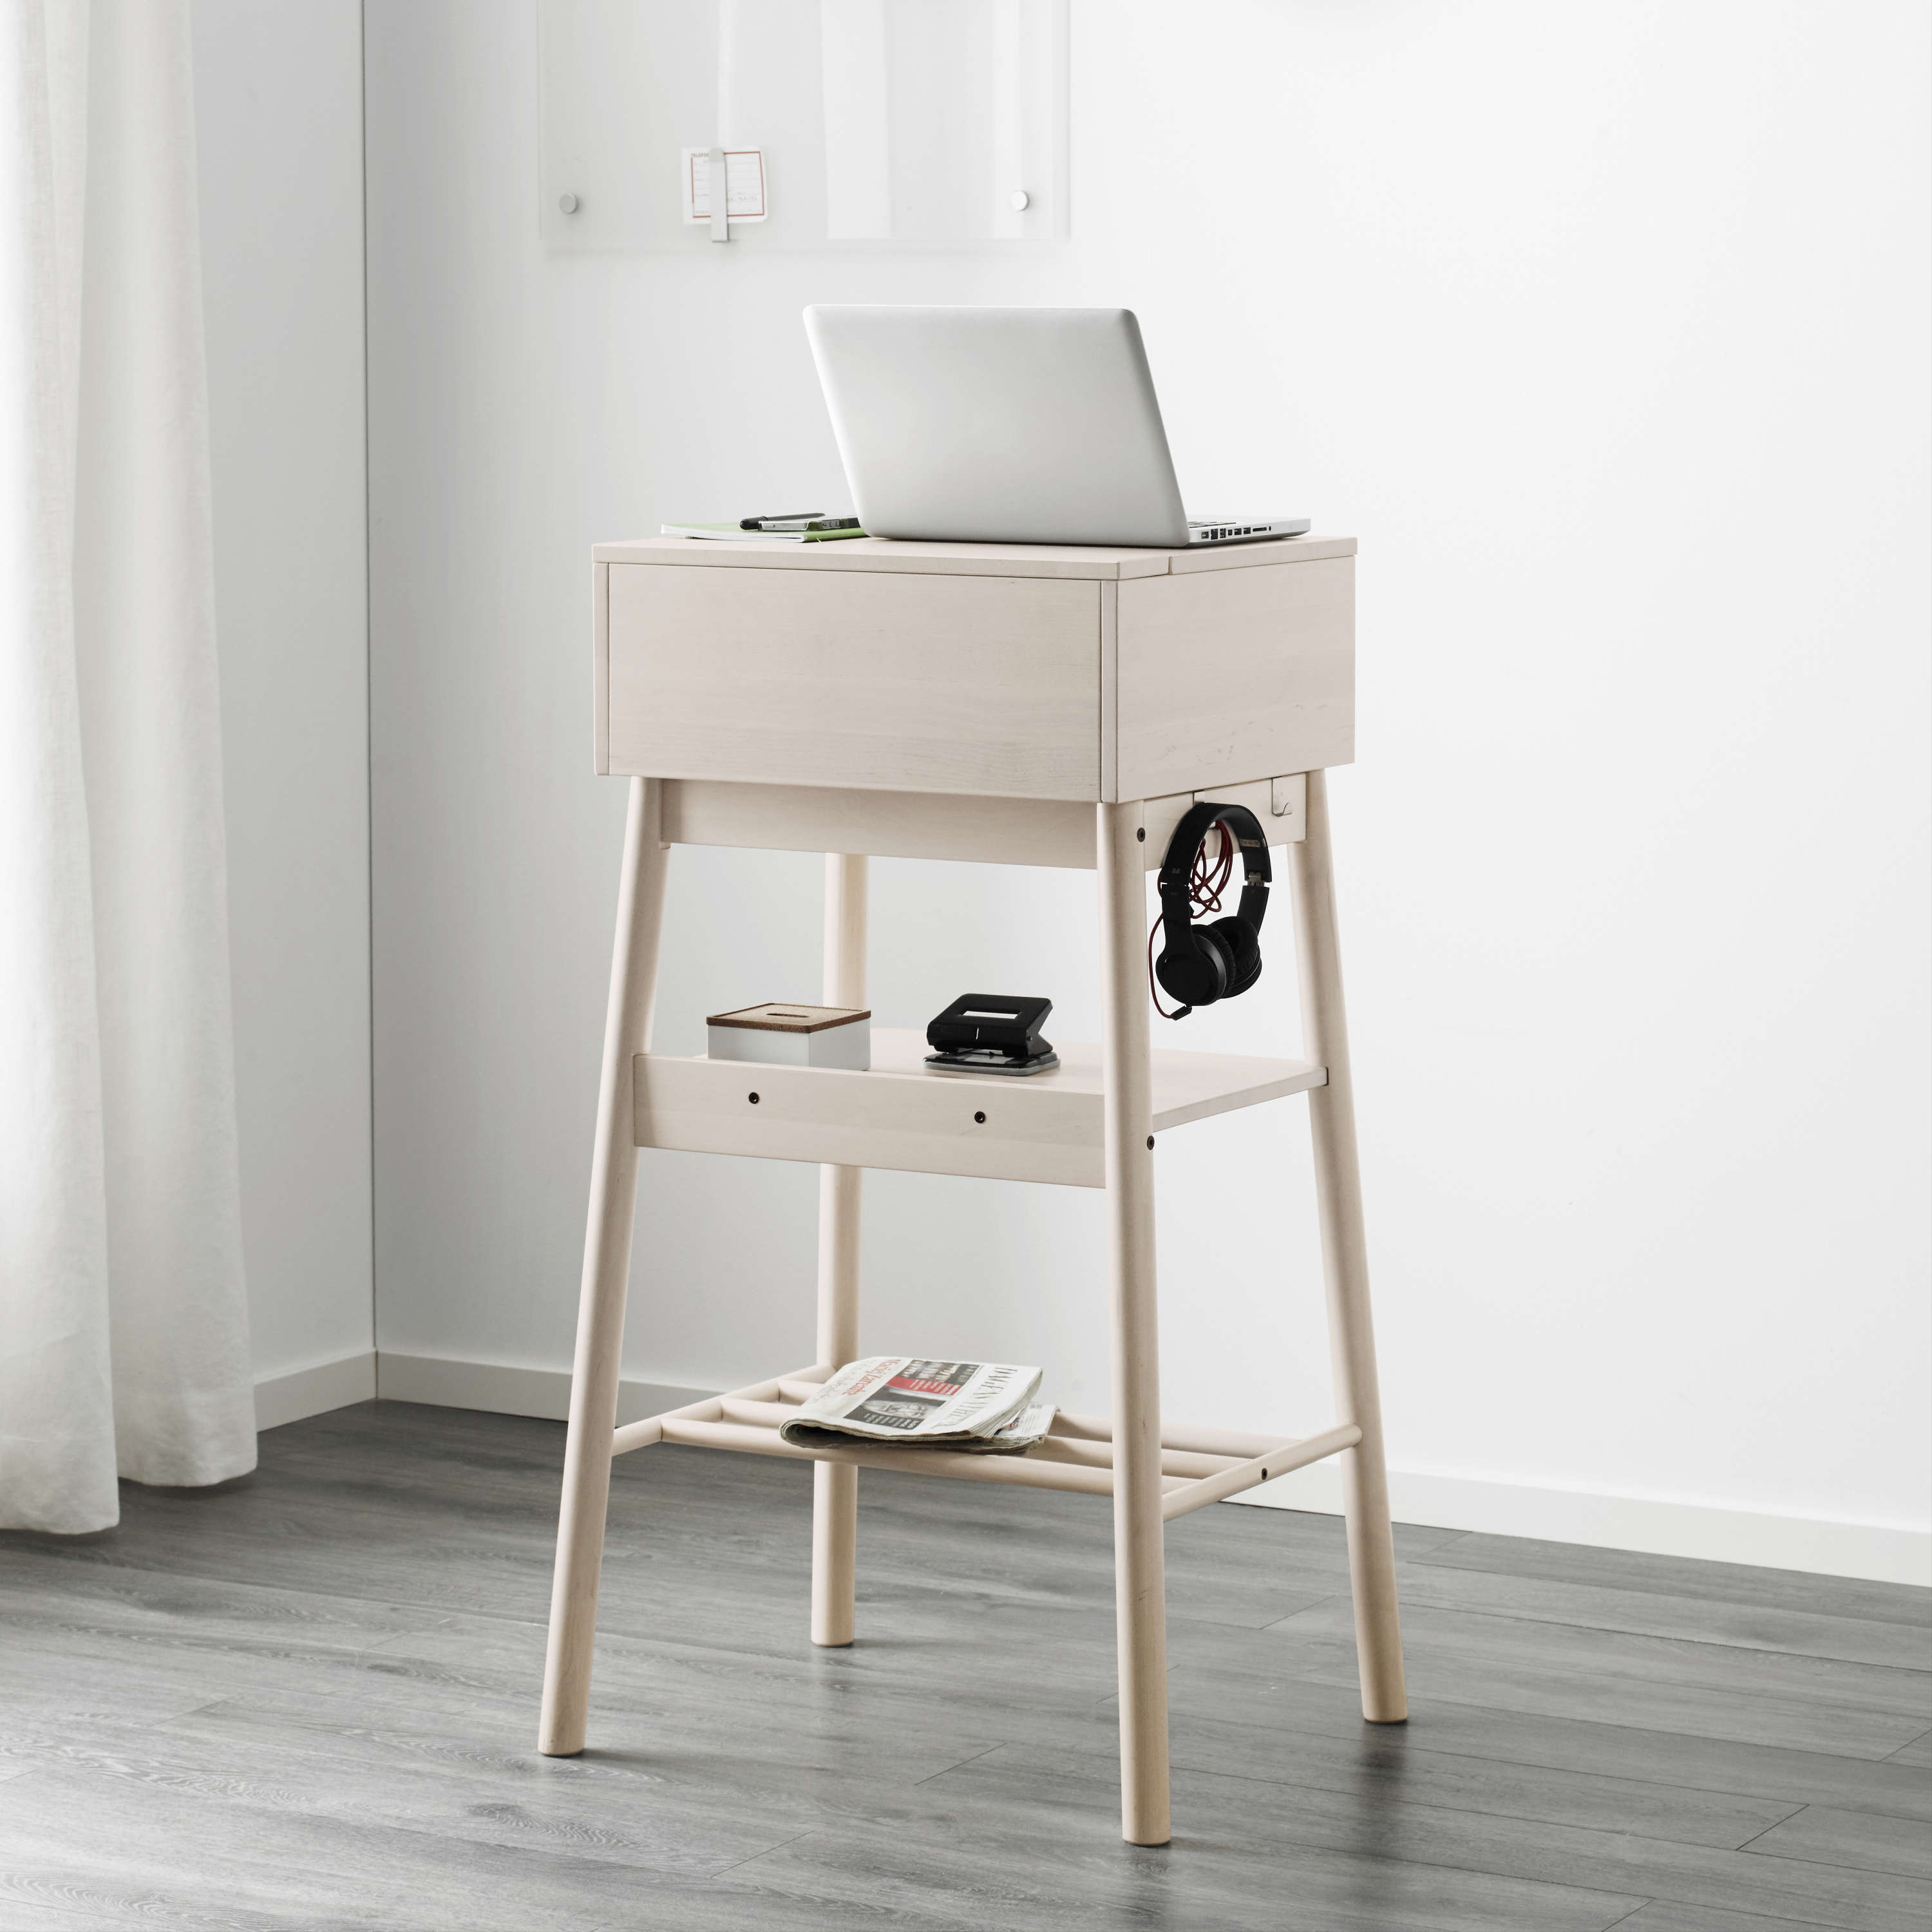 https://www.remodelista.com/wp-content/uploads/2016/08/KNOTTEN-standing-desk-Ikea-Remodelista.jpg